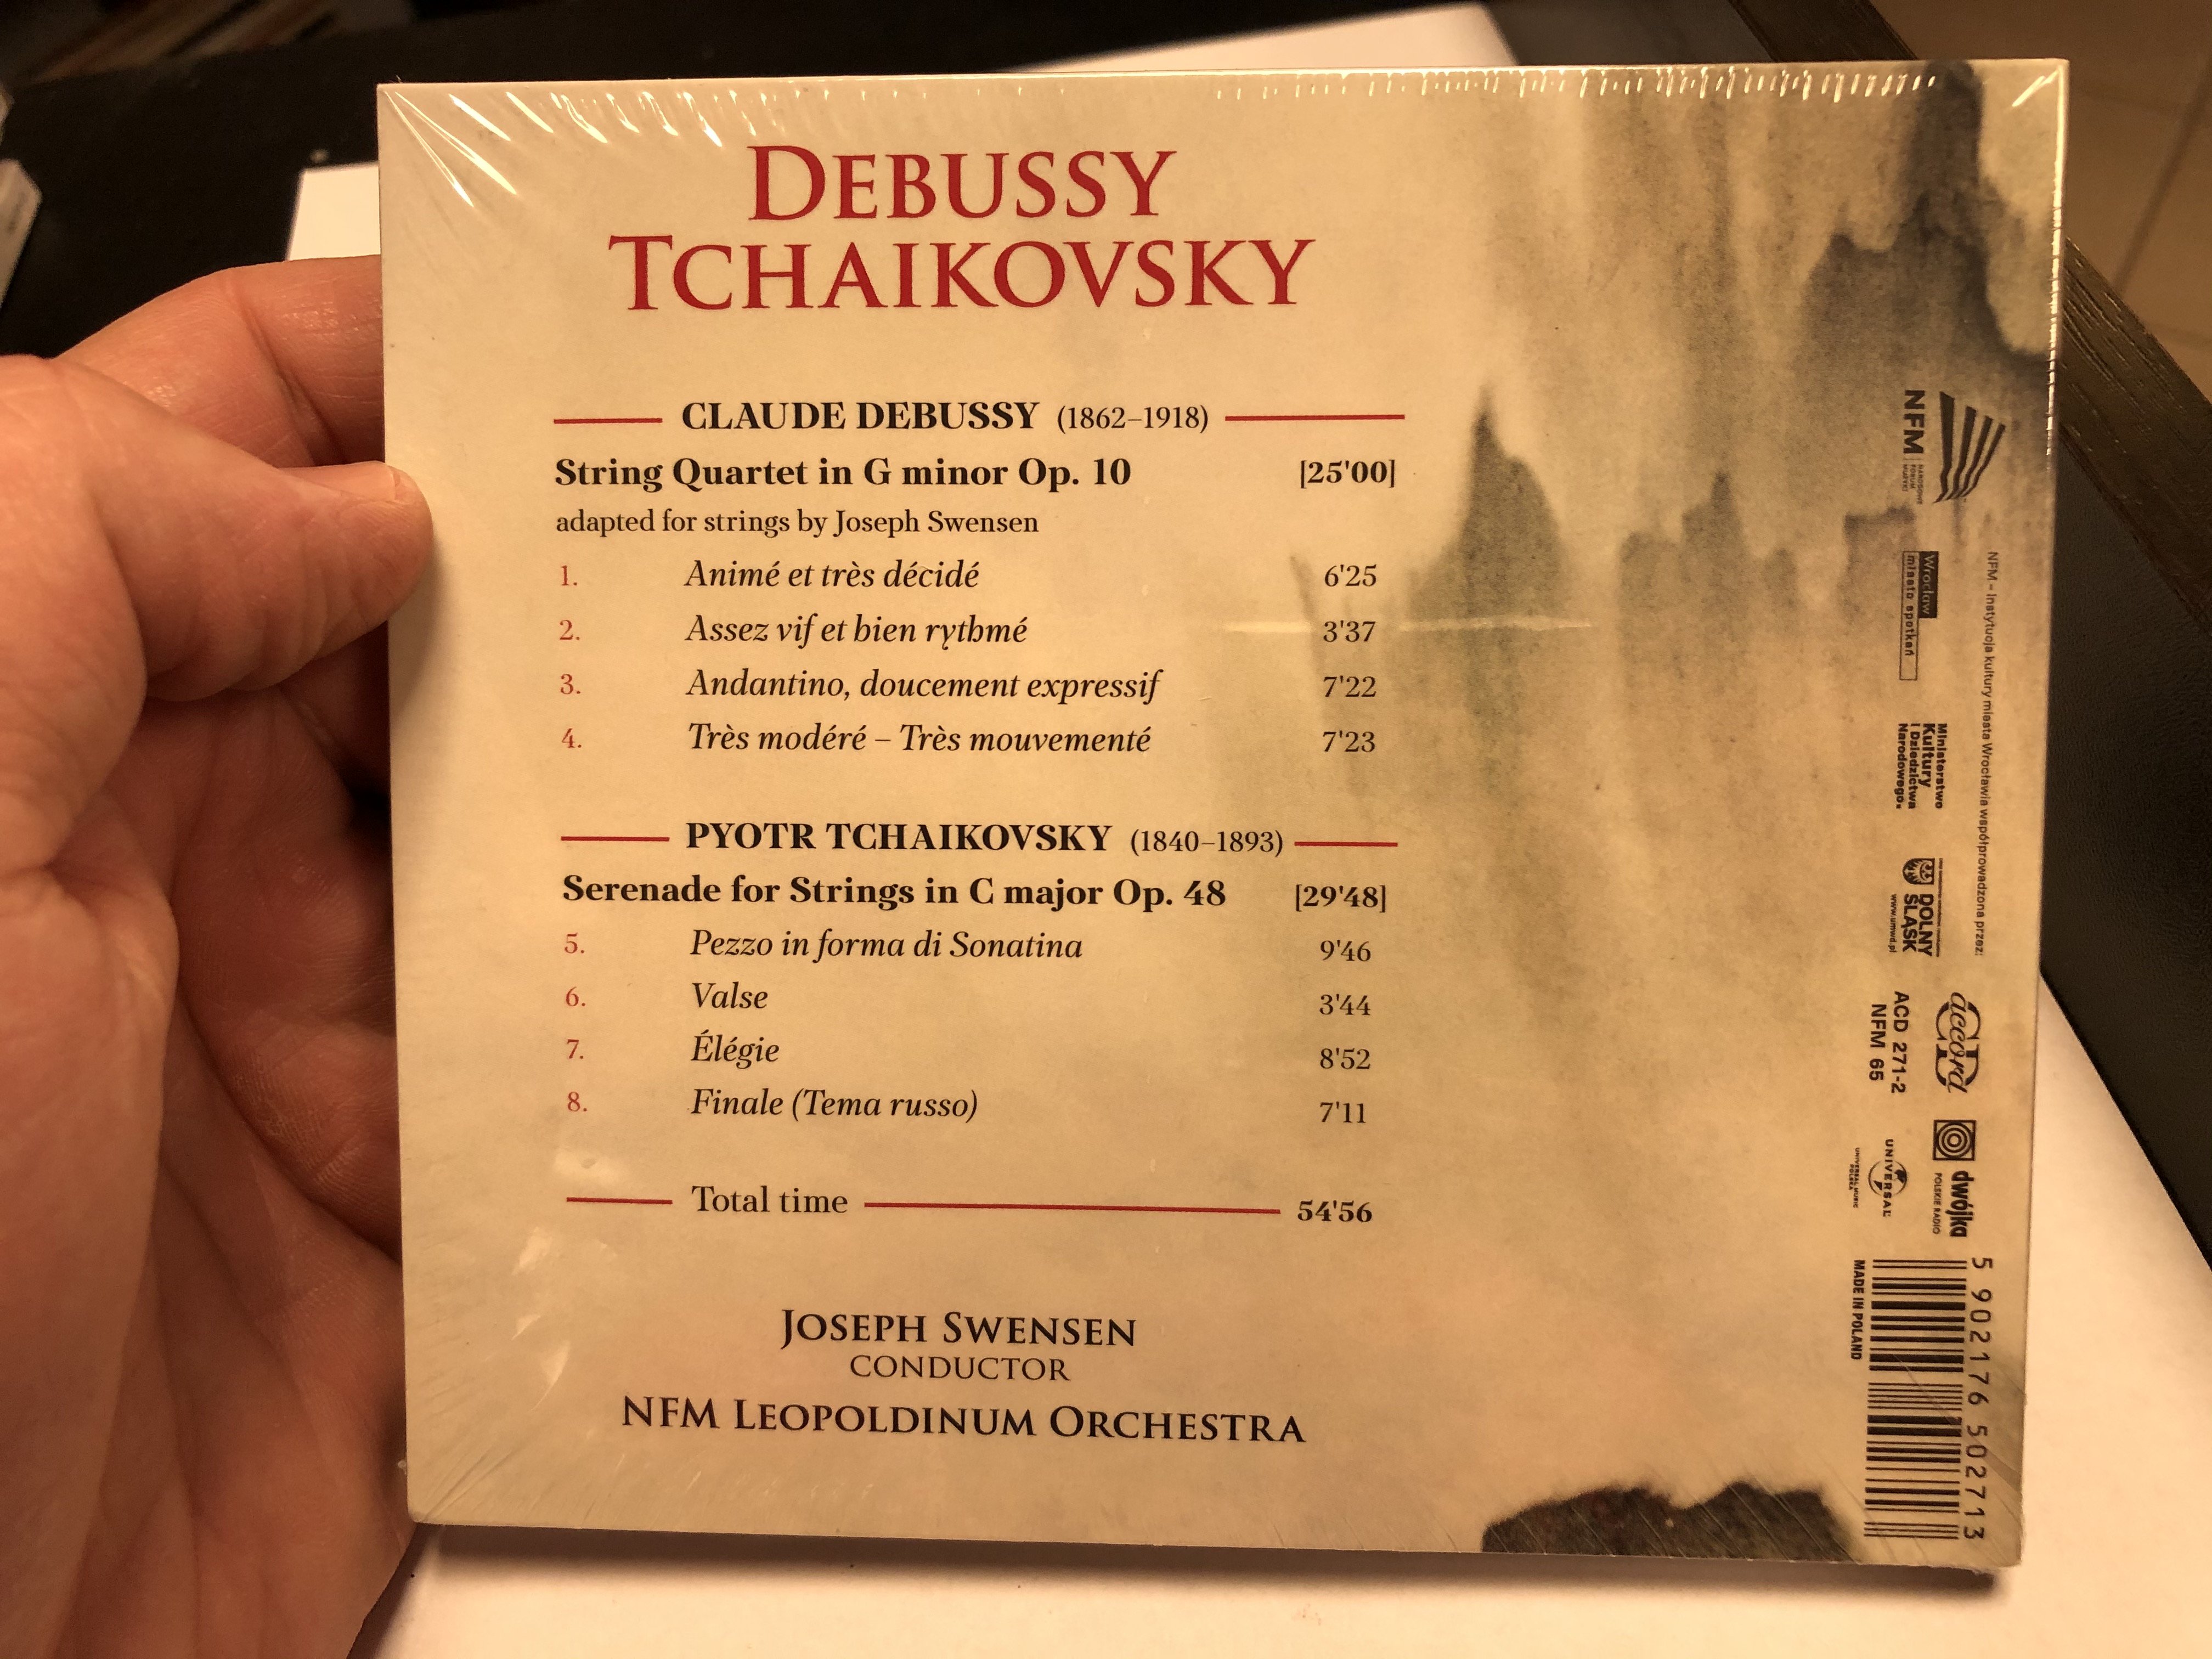 joseph-swensen-debussy-tchaikovsky-nfm-leopoldinum-orchestra-accord-audio-cd-acd-271-2-2-.jpg